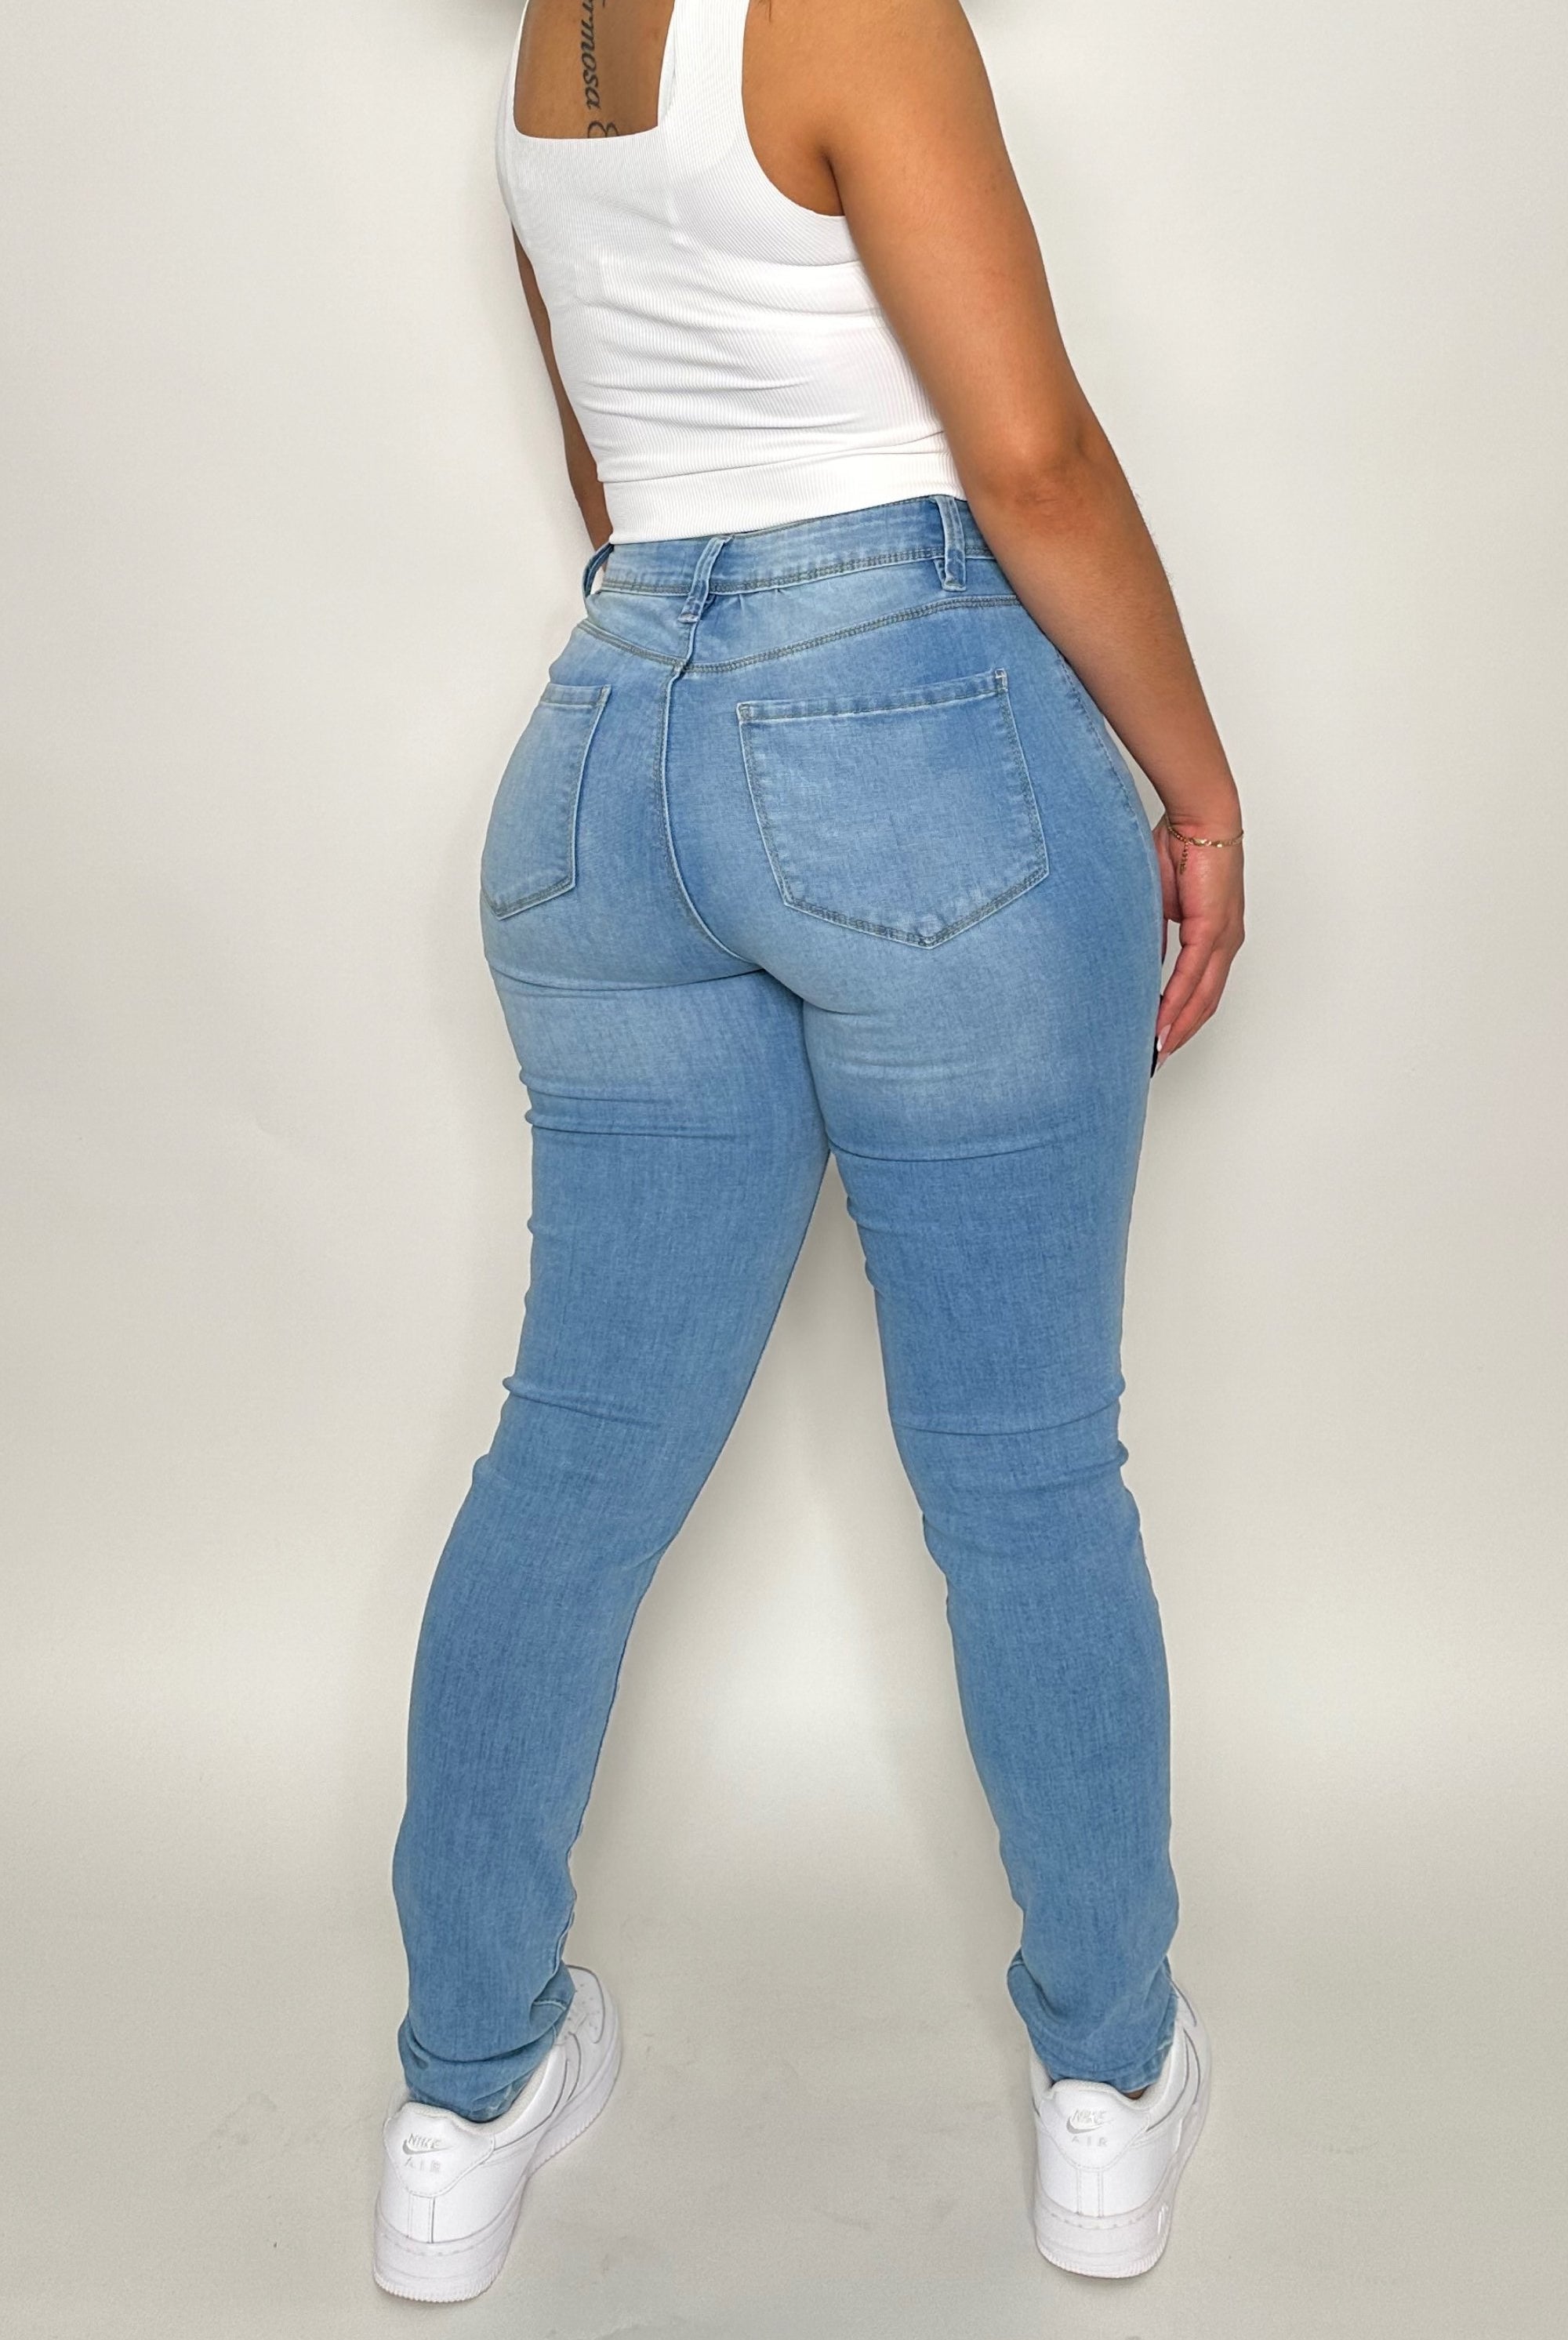 NatxCustomStyle Jeans  | Skinny Jean |